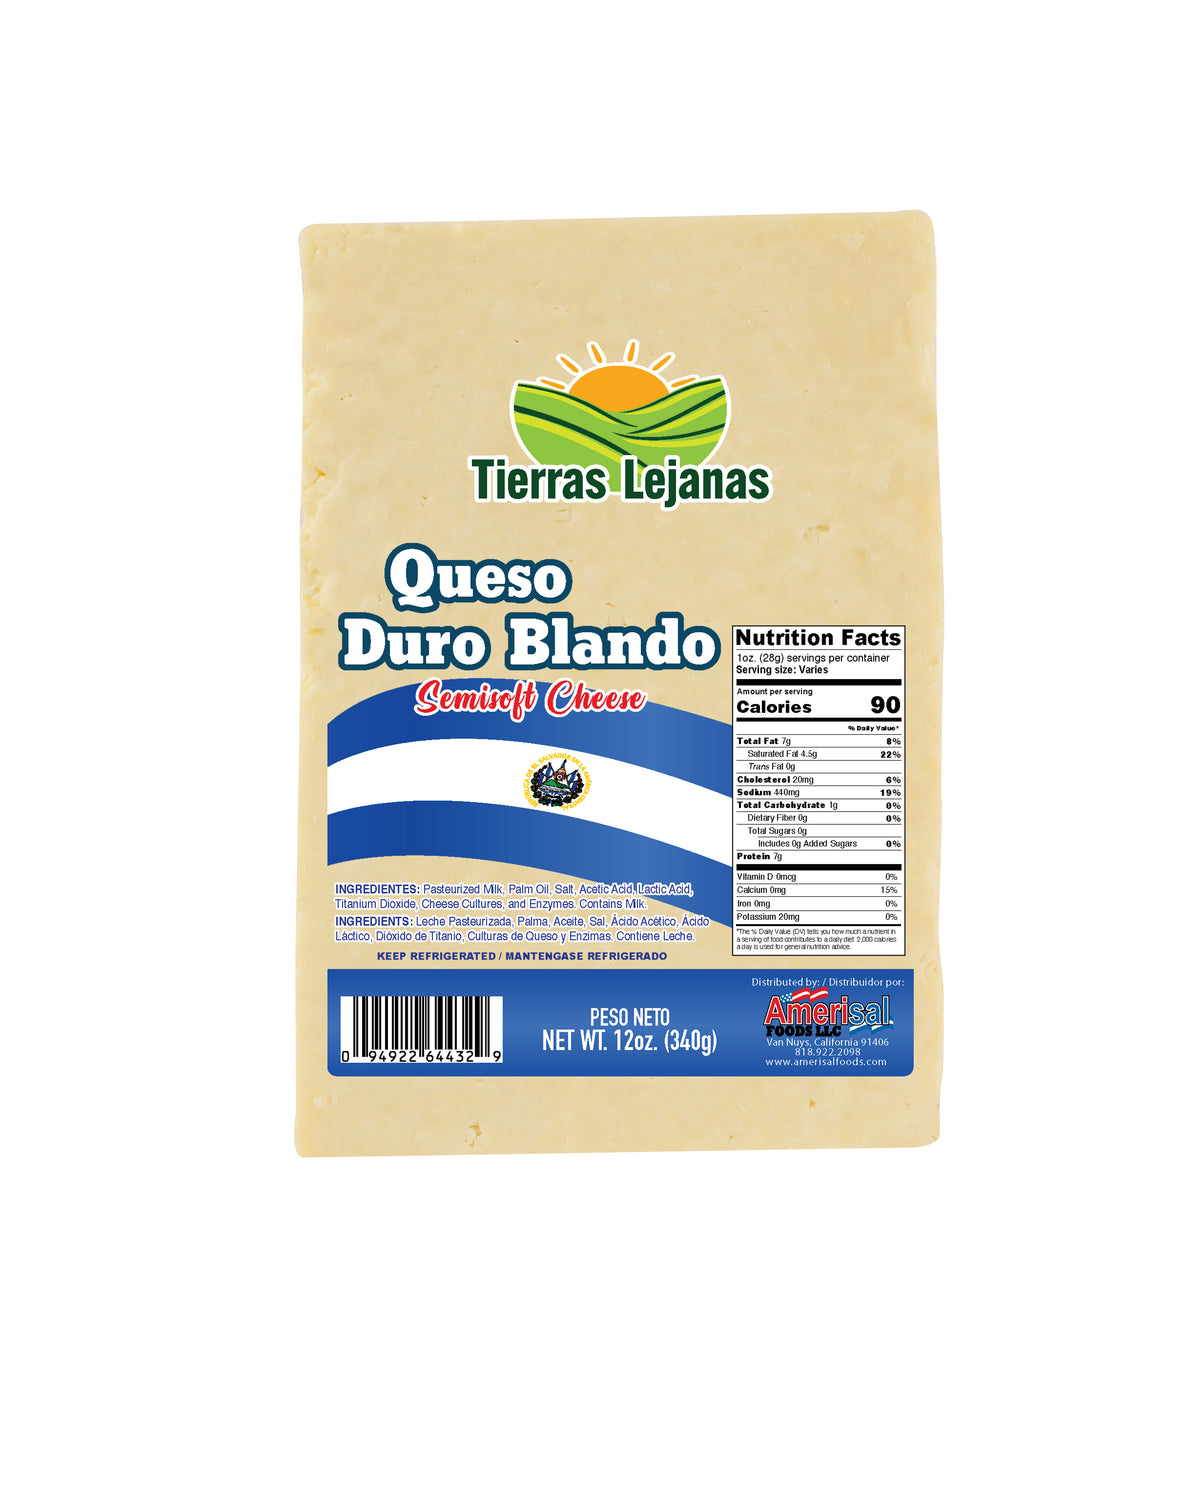 Tierra Lejanas Queso Duro Blando (Semisoft Cheese) 12oz